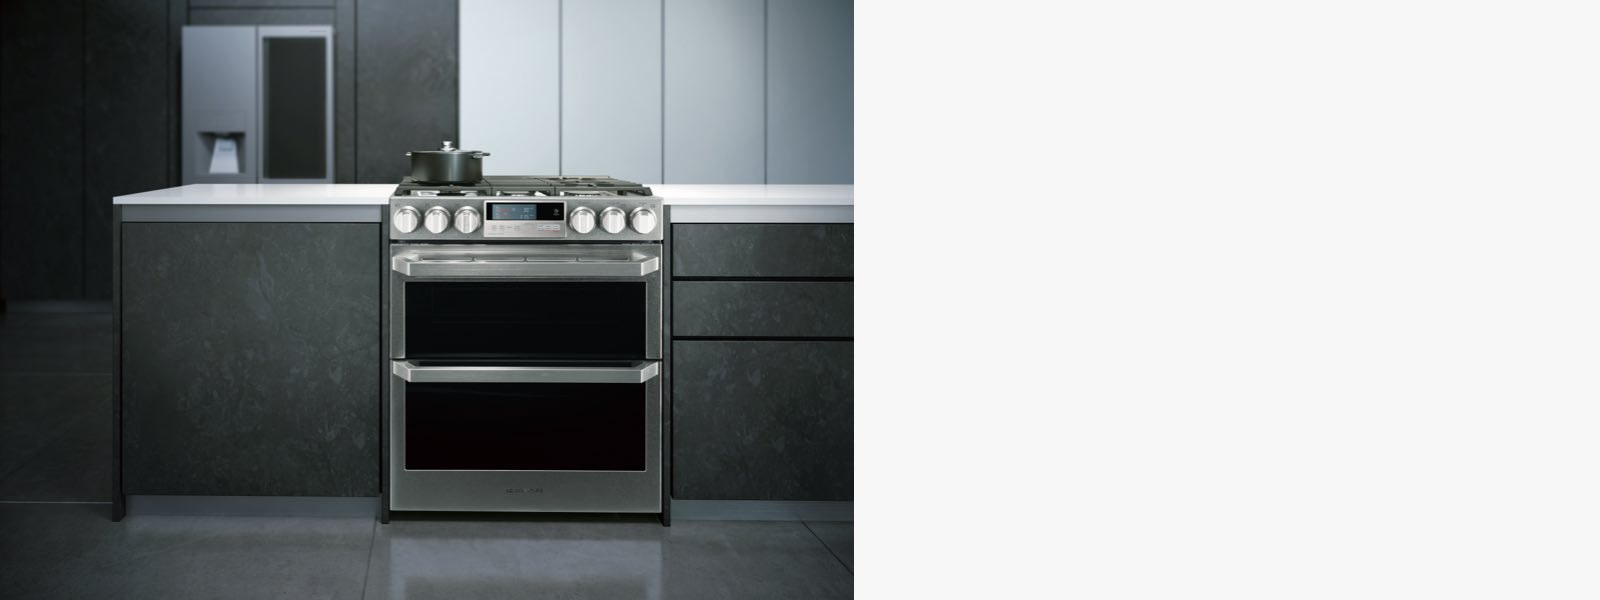 LG SIGNATURE Cooking Appliances